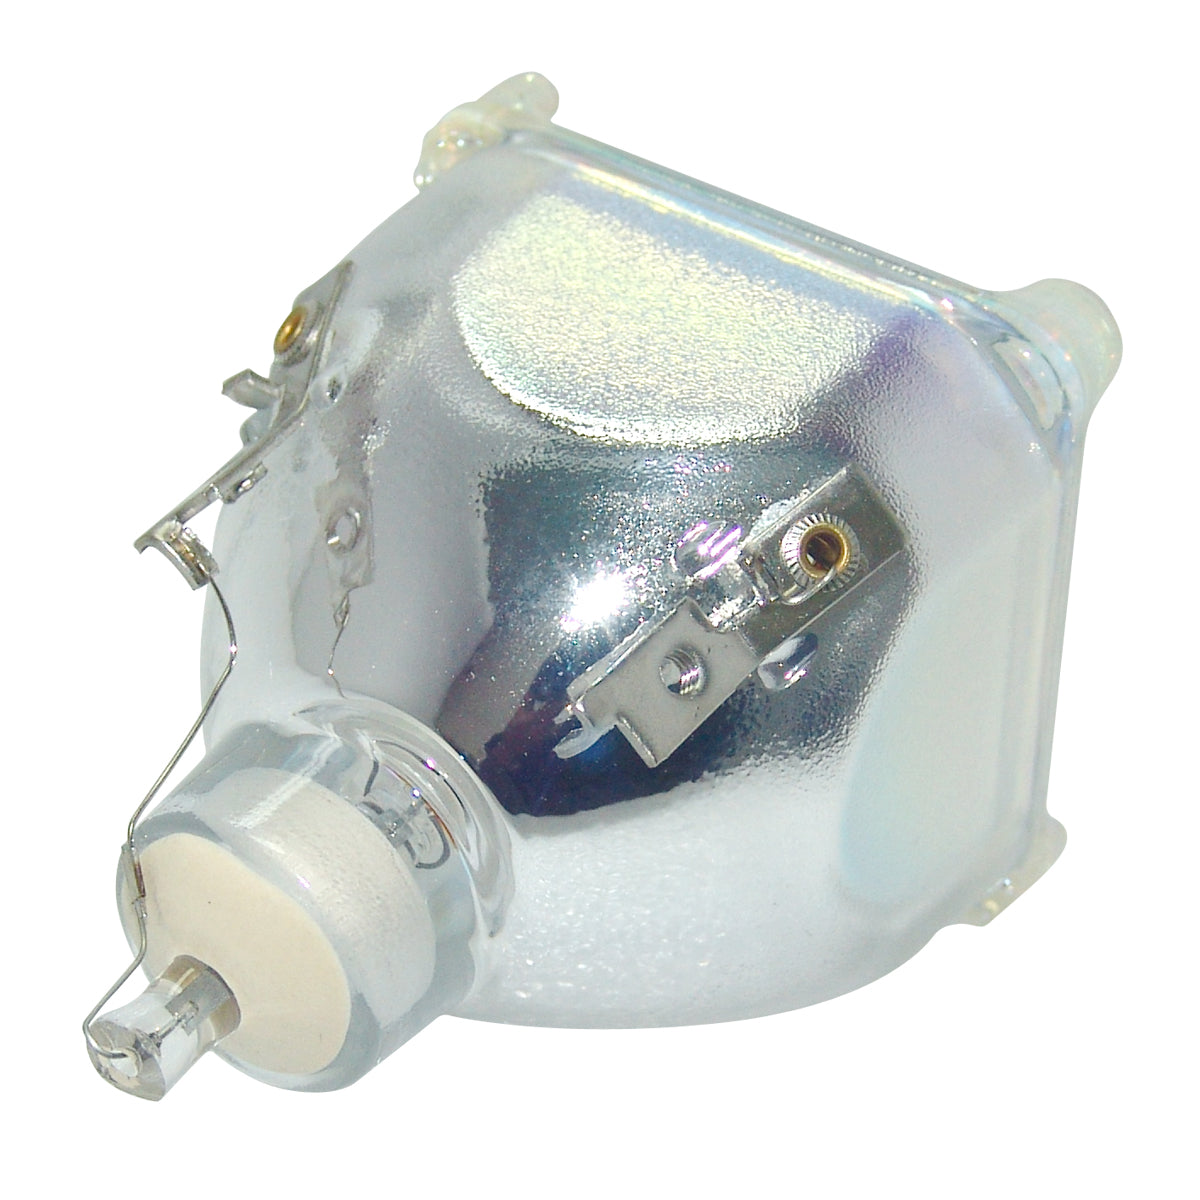 Hitachi DT00401 Osram Projector Bare Lamp